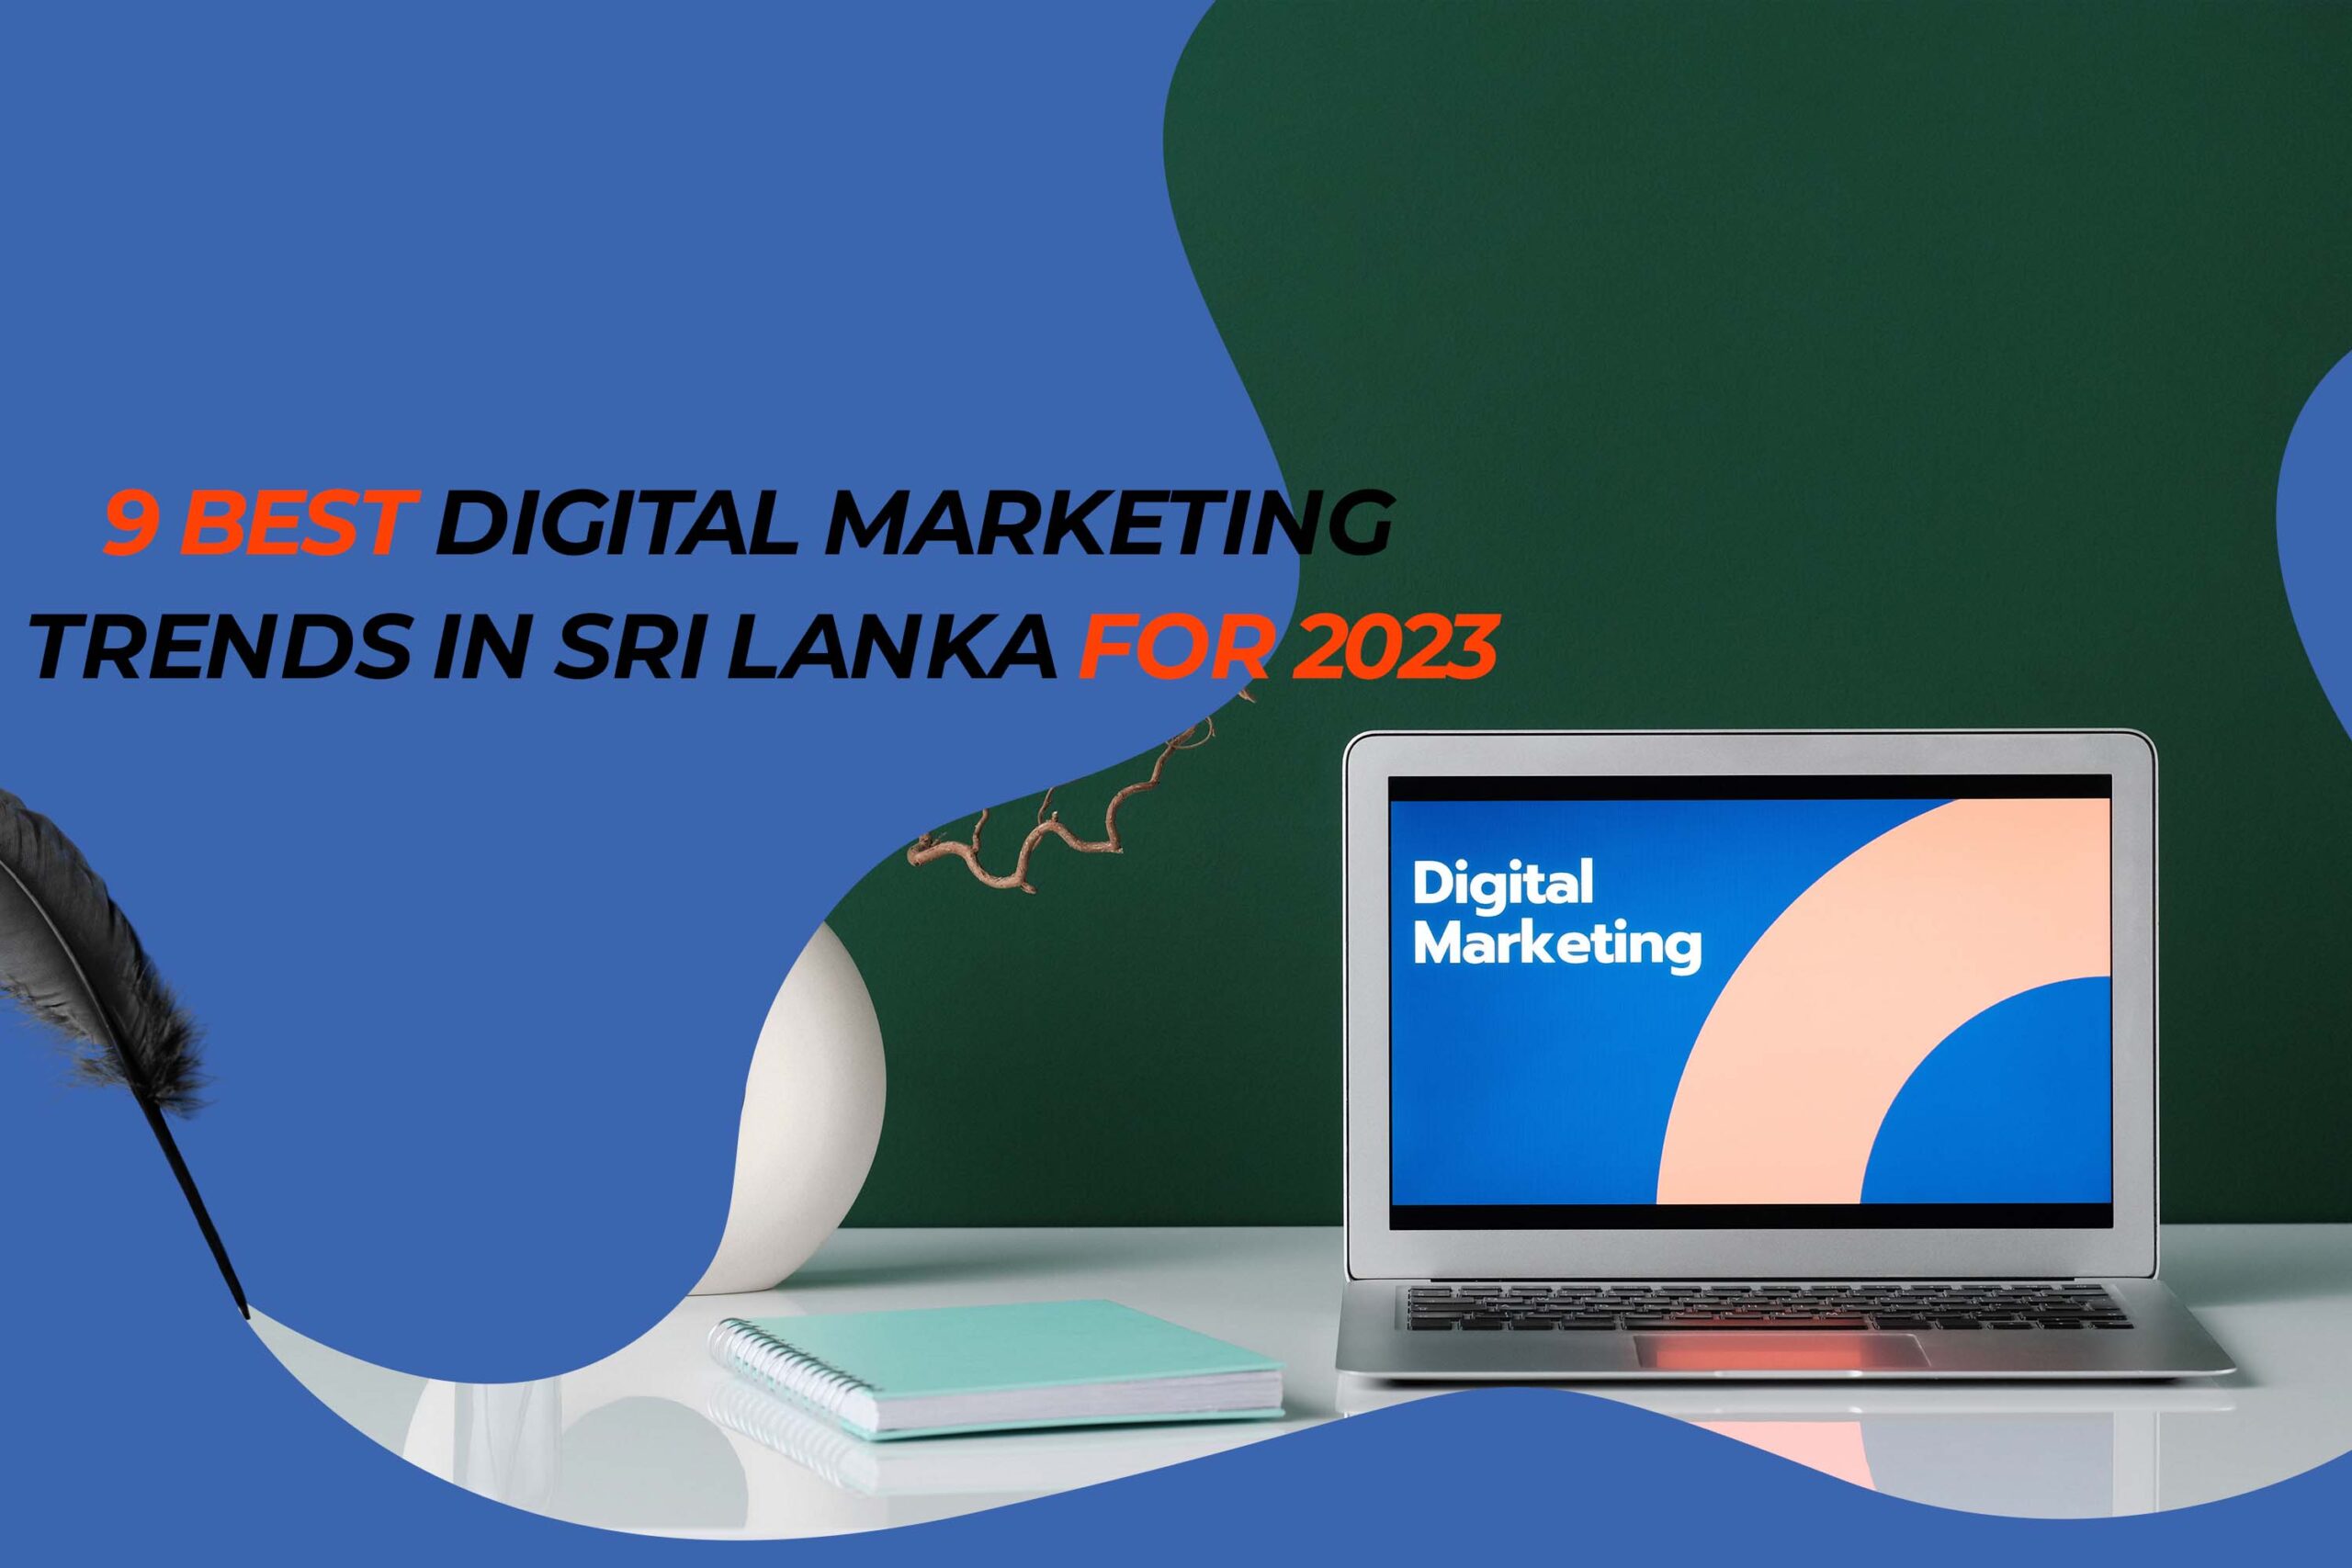 9 Best Digital Marketing Trends in Sri Lanka for 2023